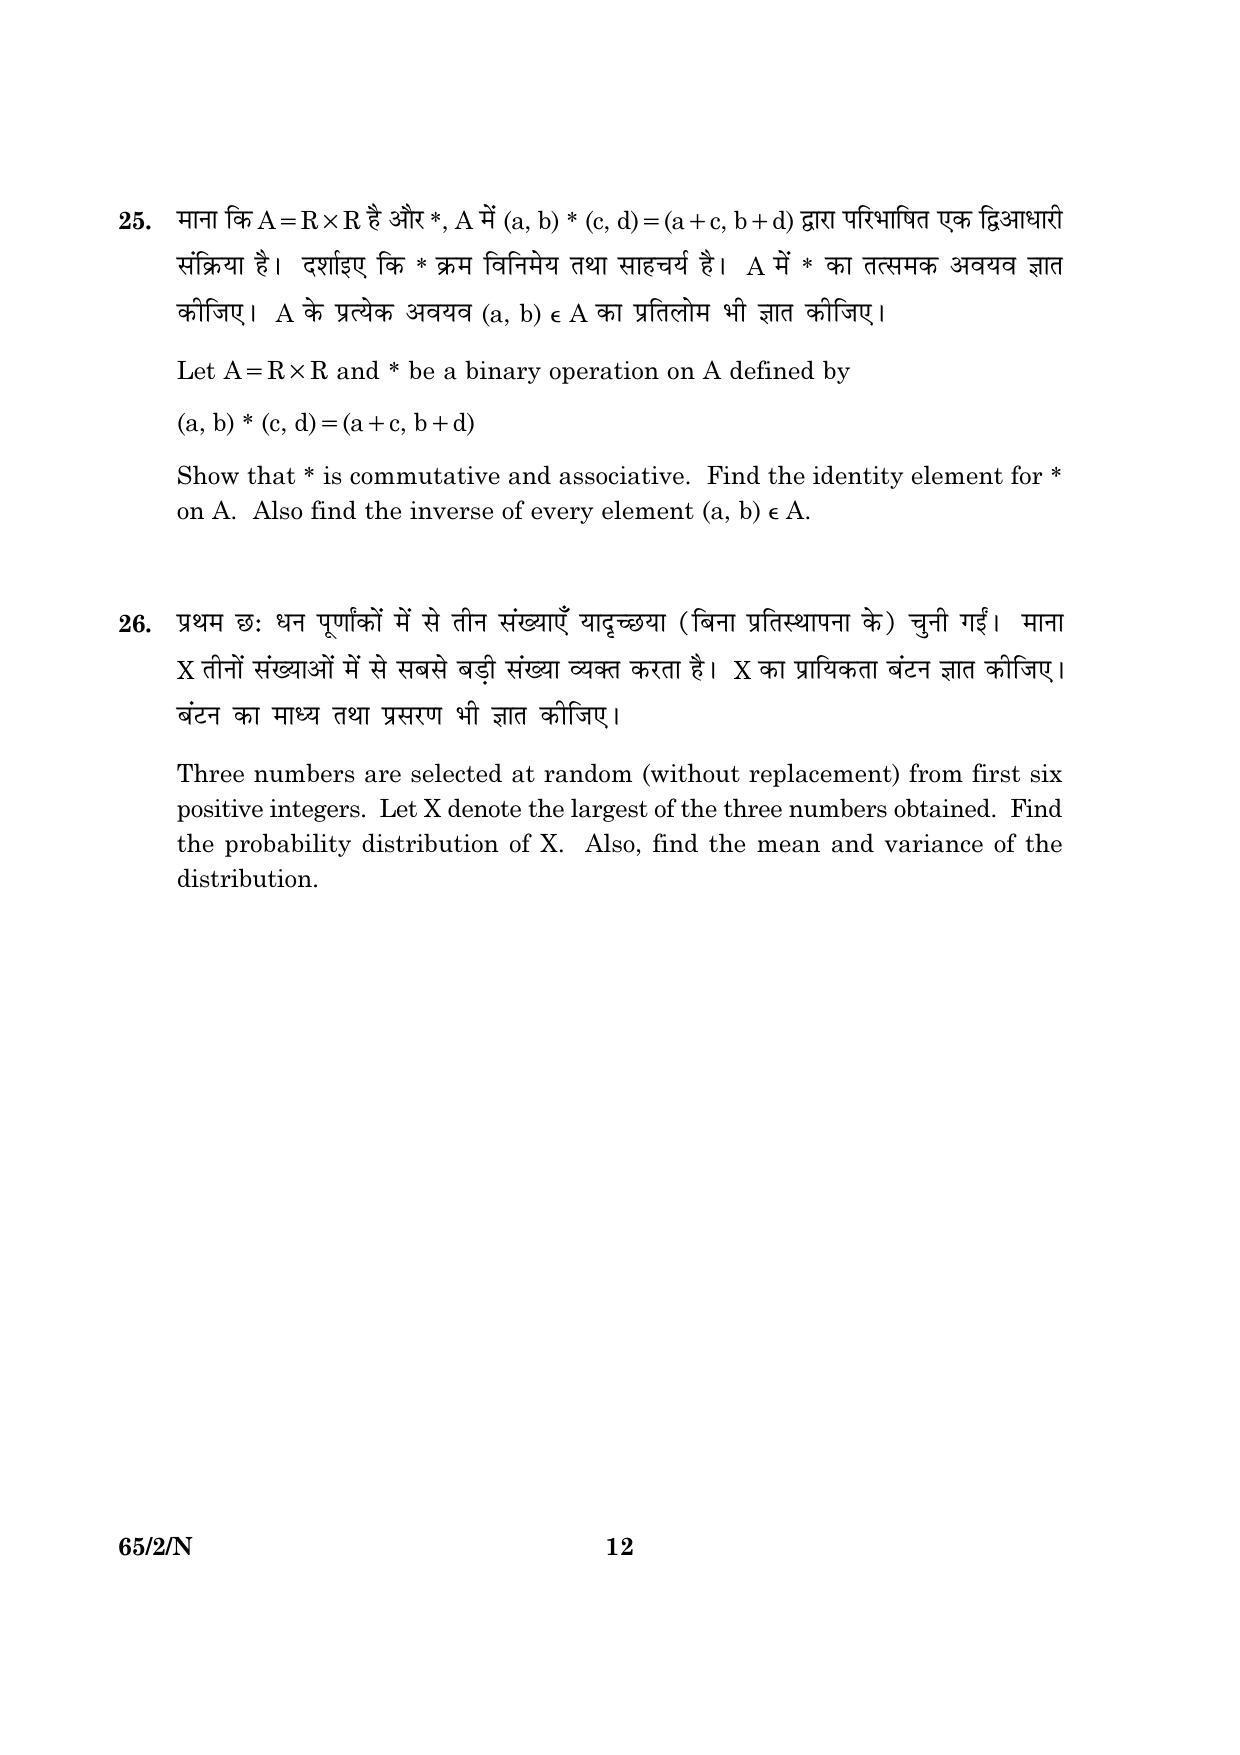 CBSE Class 12 065 Set 2 N Mathematics 2016 Question Paper - Page 12